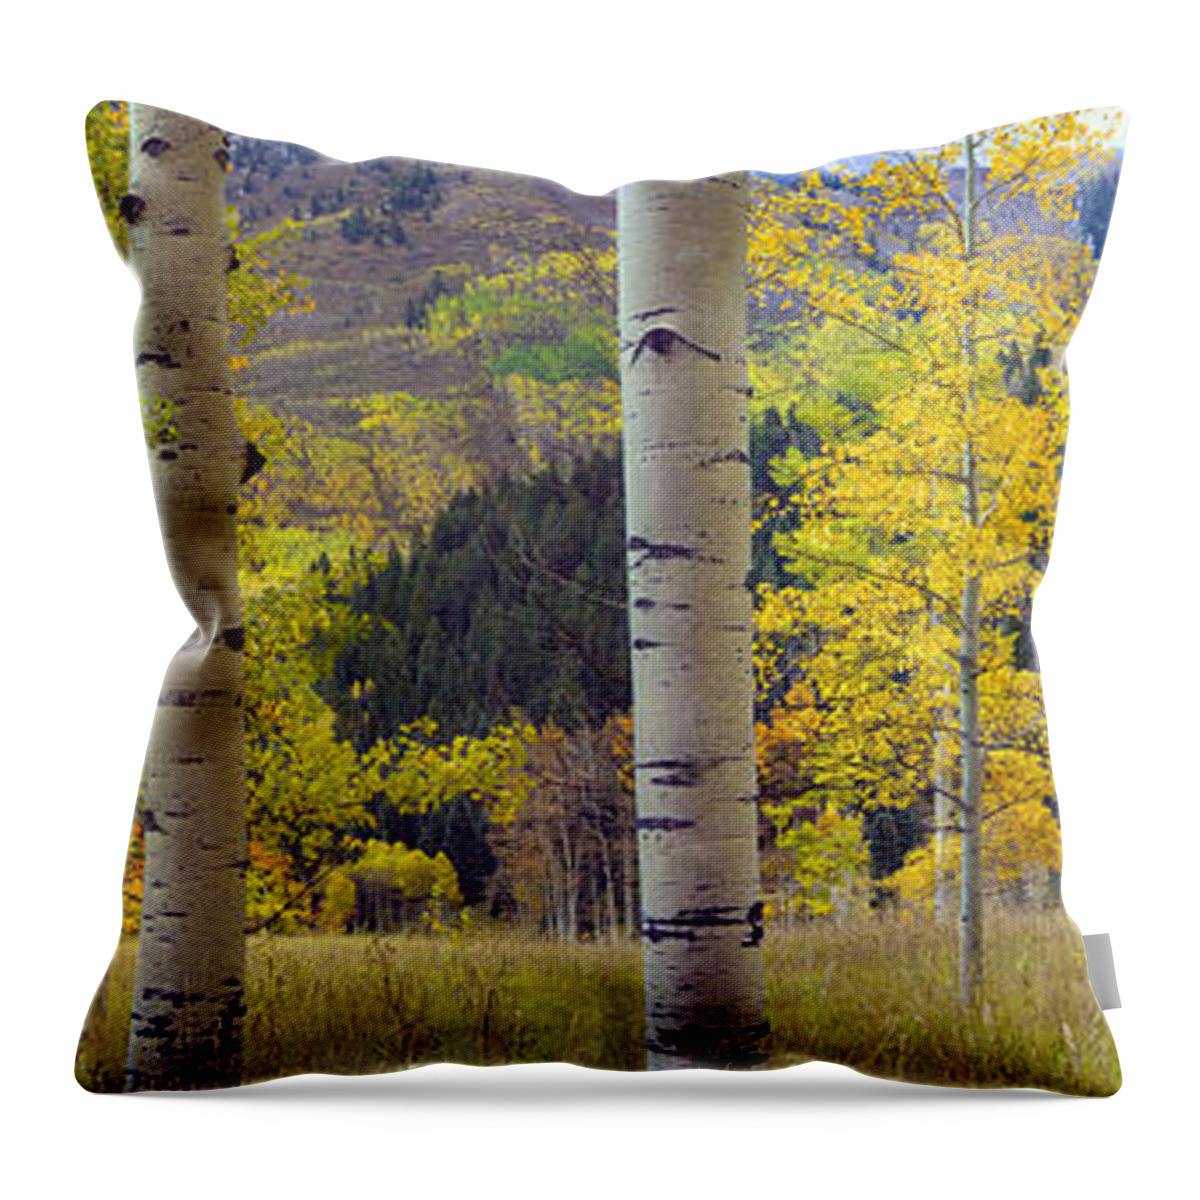 Feb0514 Throw Pillow featuring the photograph Quaking Aspen Grove In Autumn Colorado by Tim Fitzharris